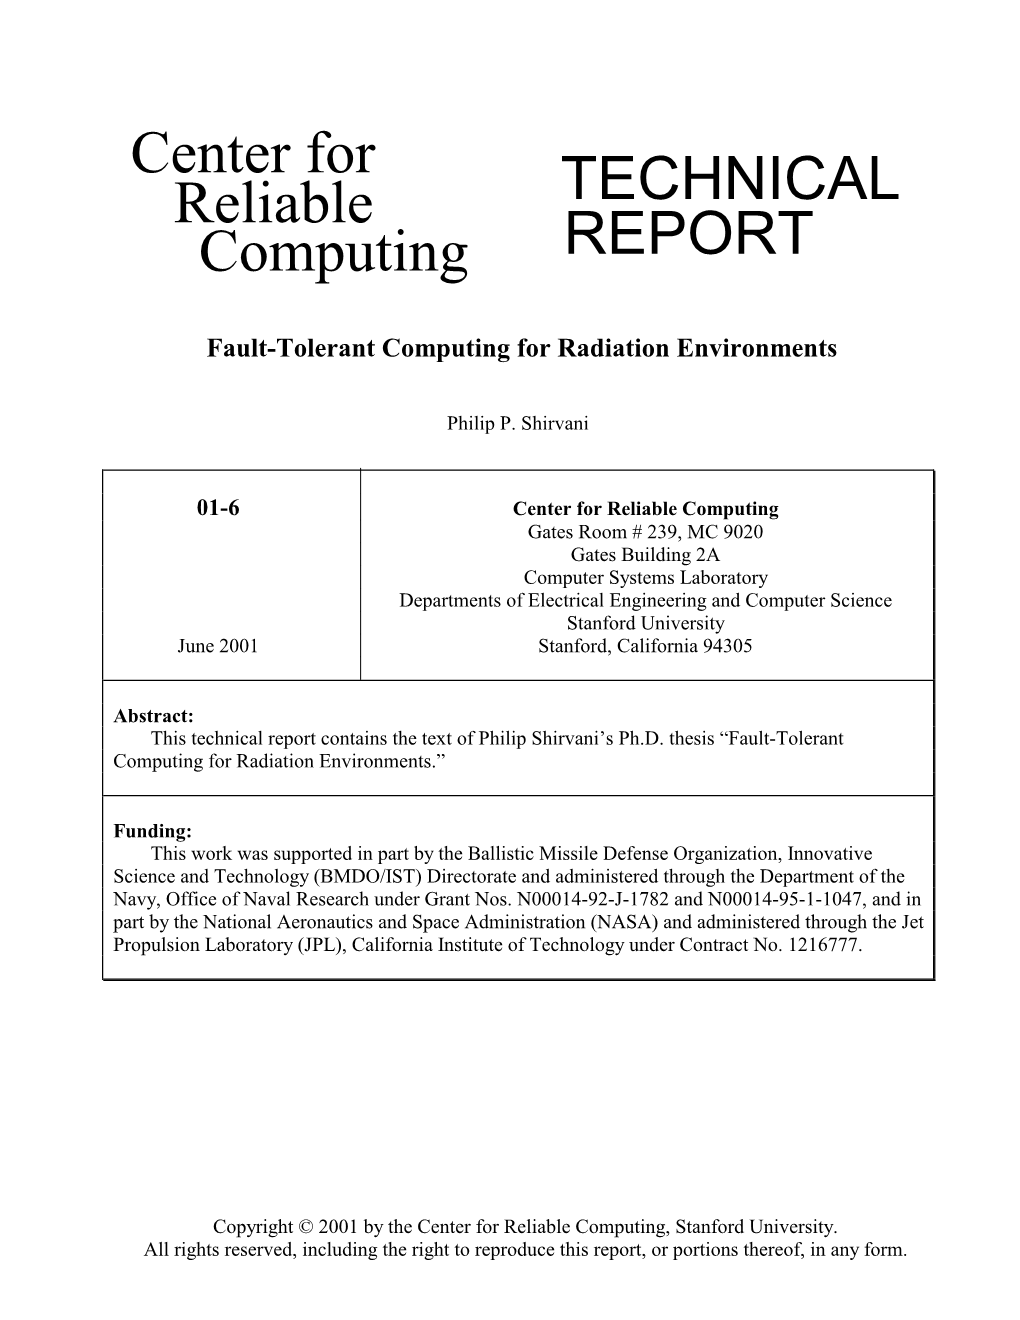 Fault-Tolerant Computing for Radiation Environments